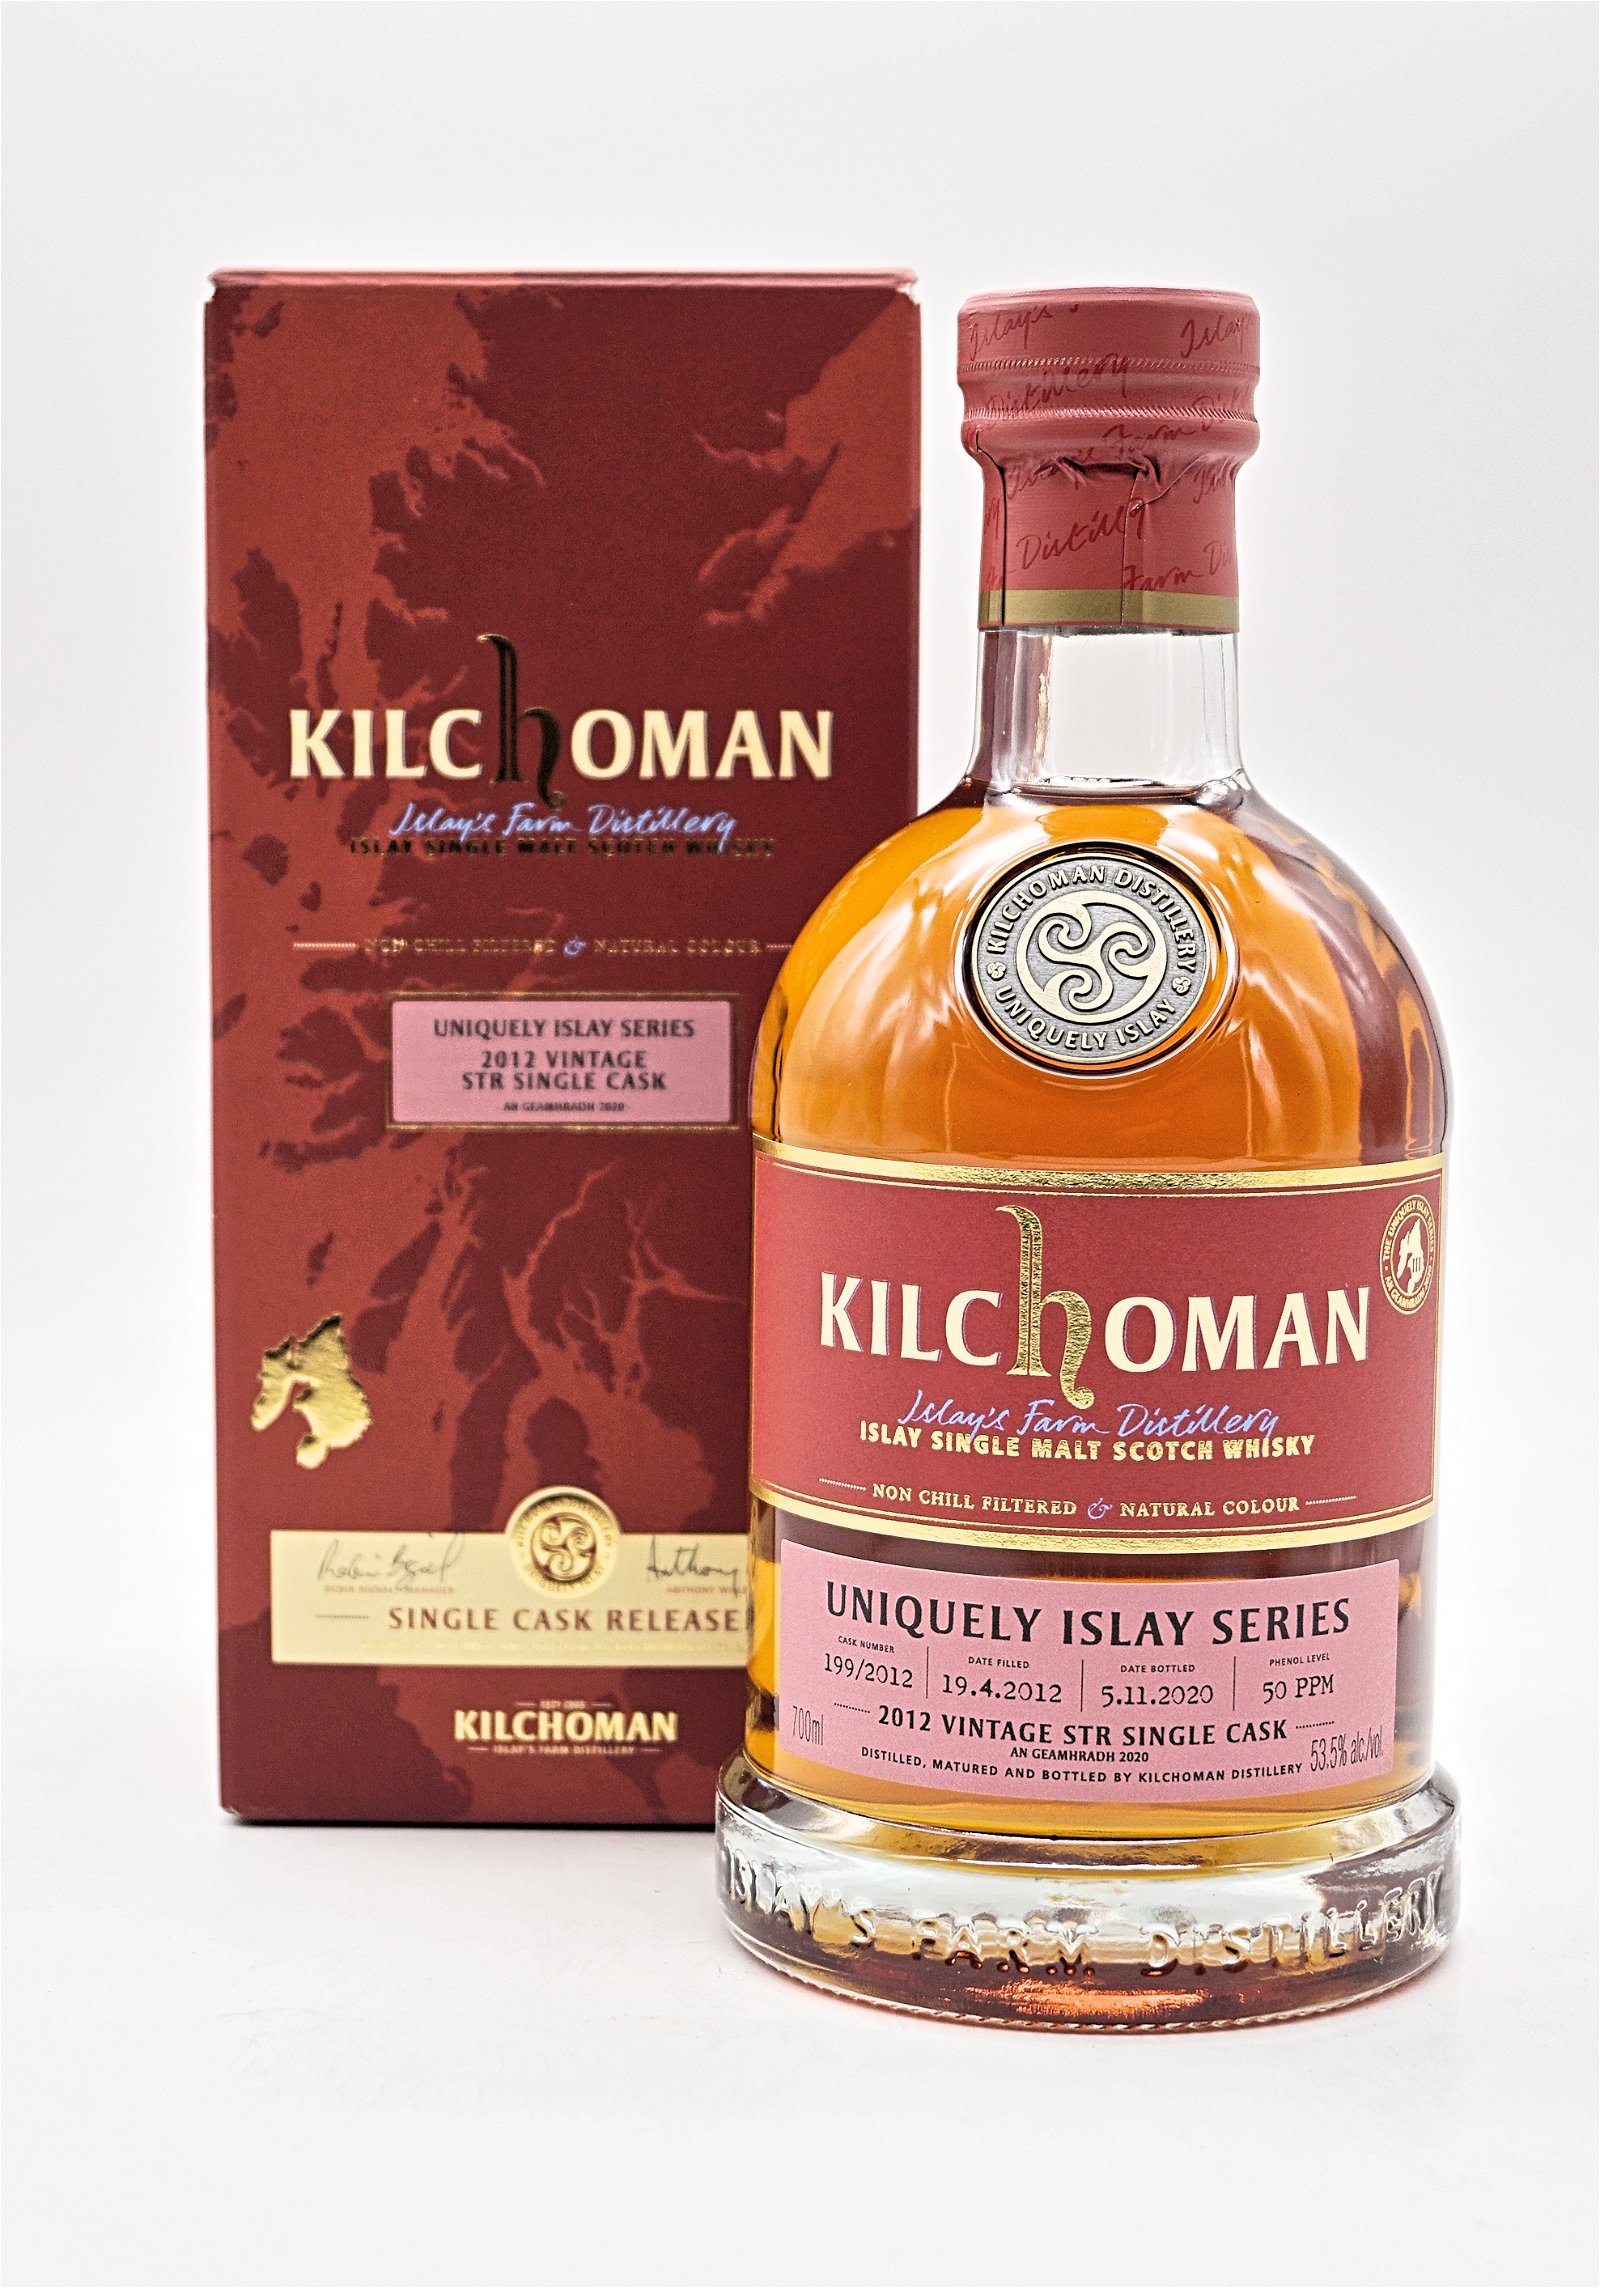 Kilchoman Uniquely Islay Series 2012 Vintage STR Single Cask Single Malt Scotch Whisky